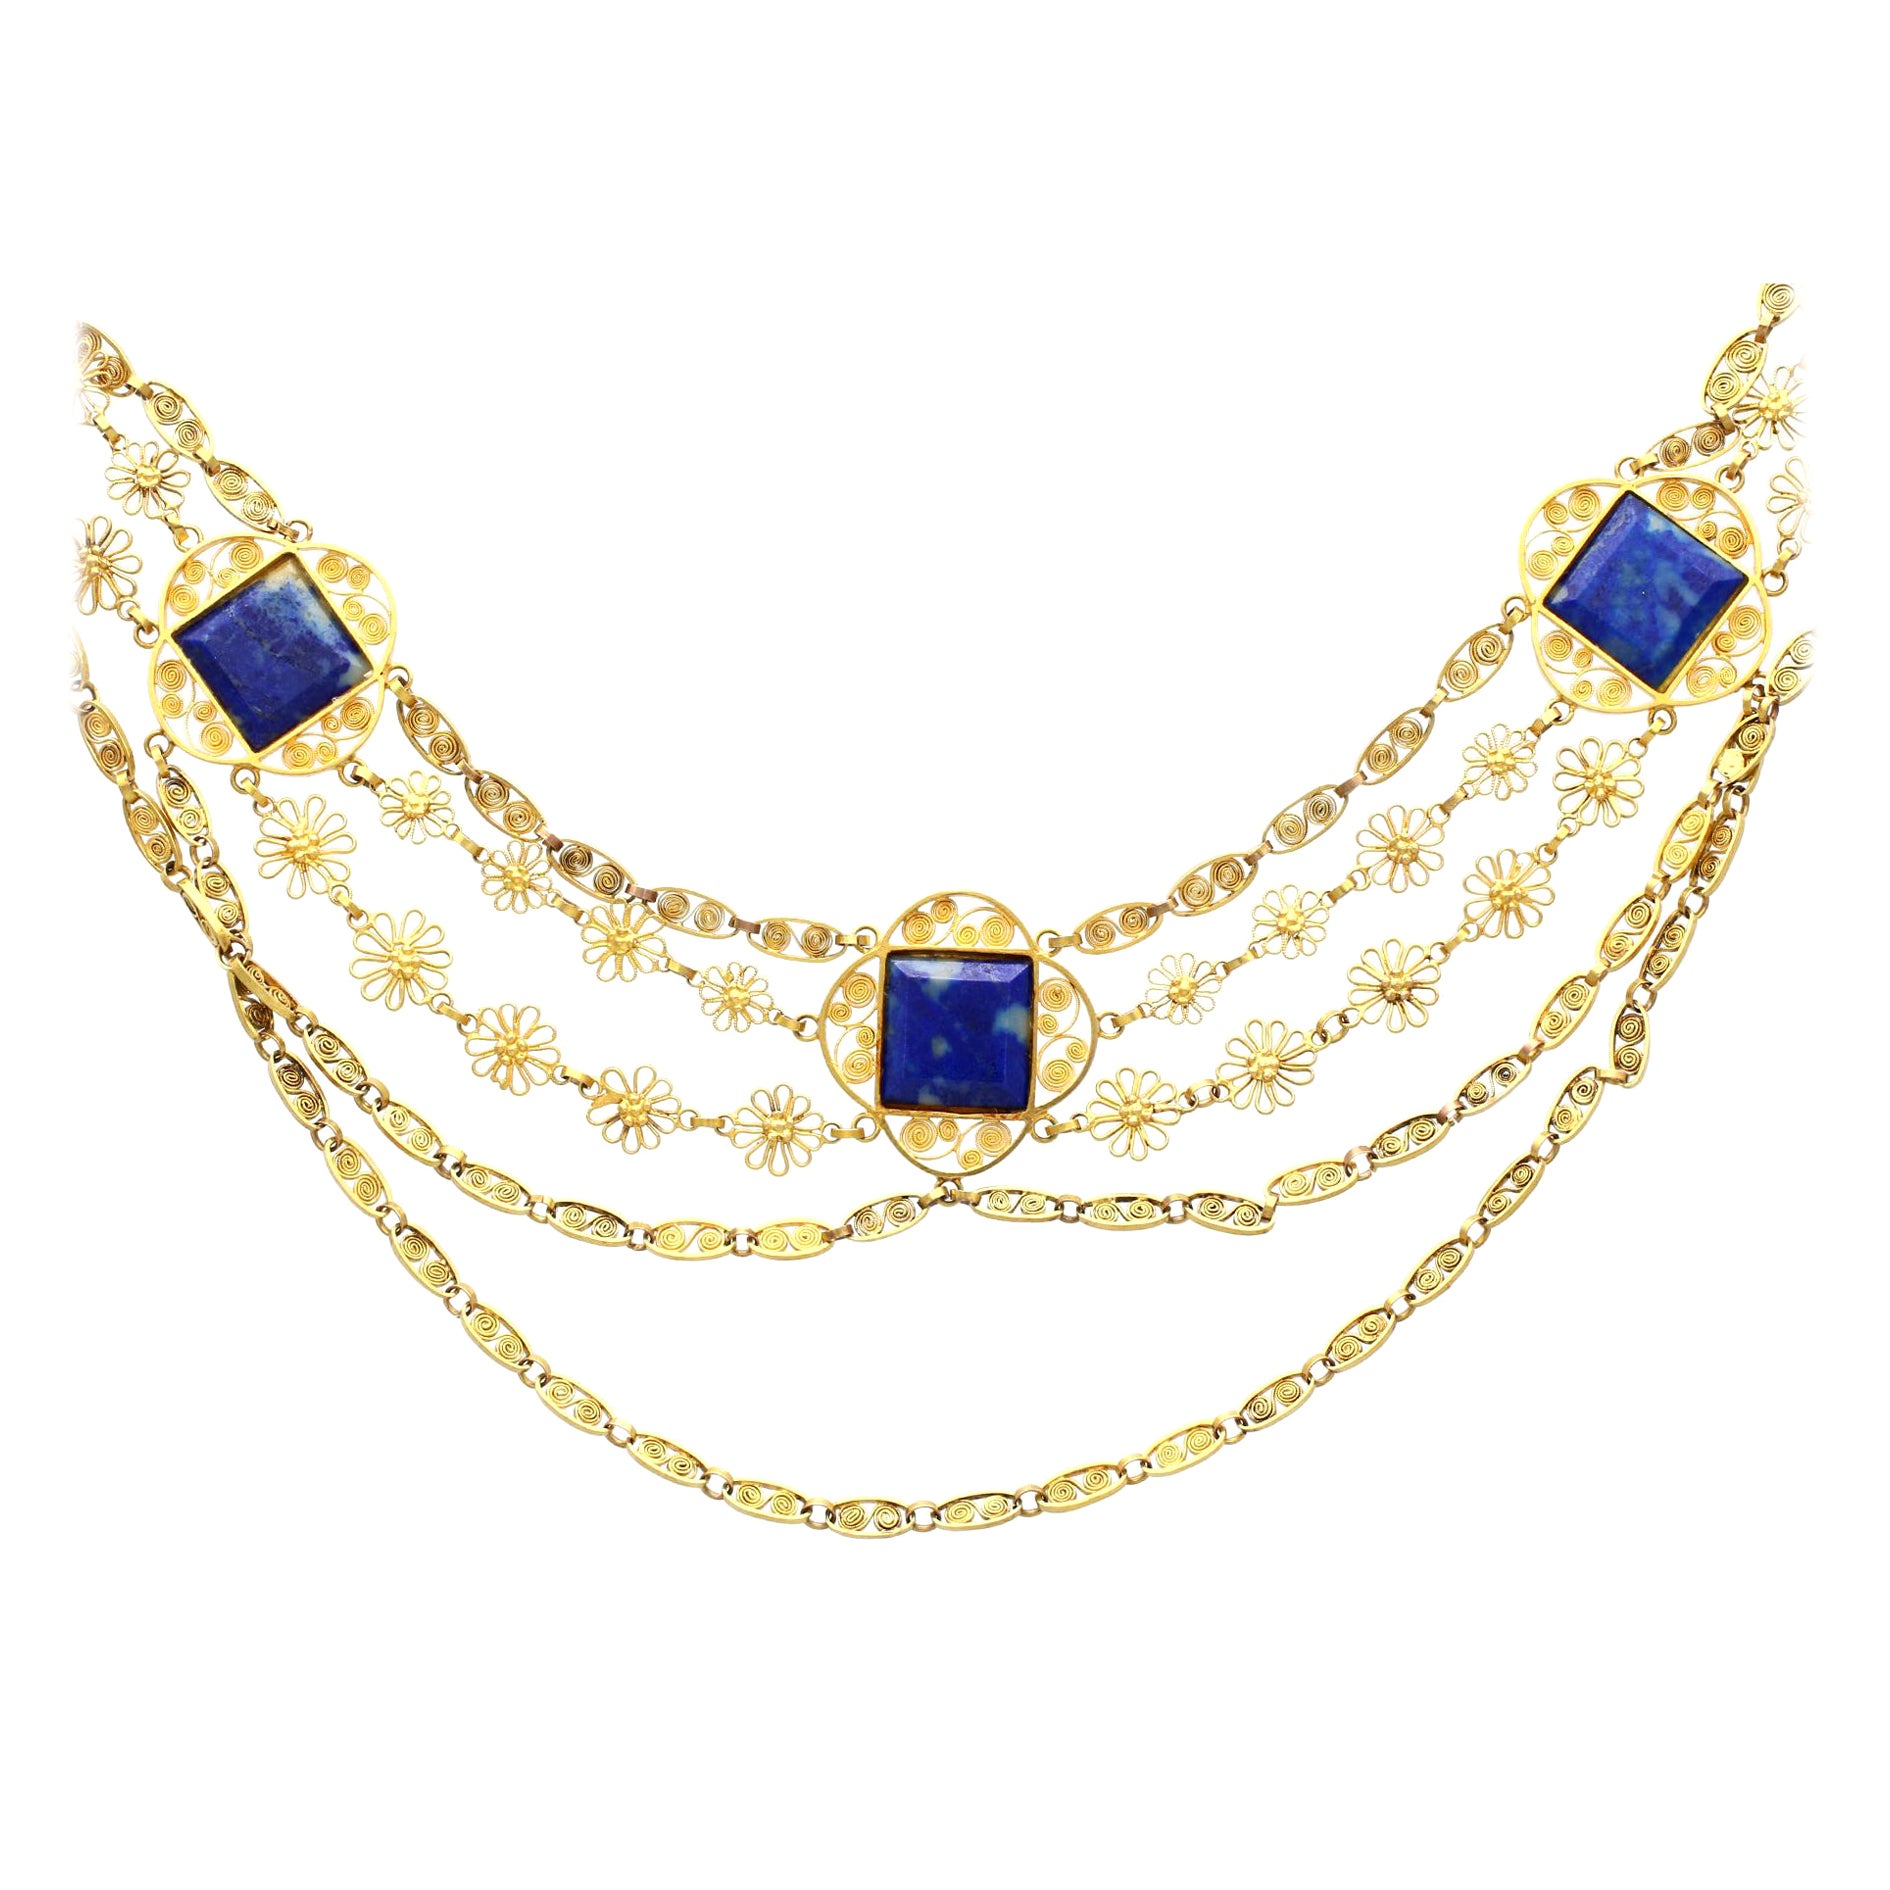 Antique Victorian 5.55 Carat Lapis Lazuli Yellow Gold Necklace